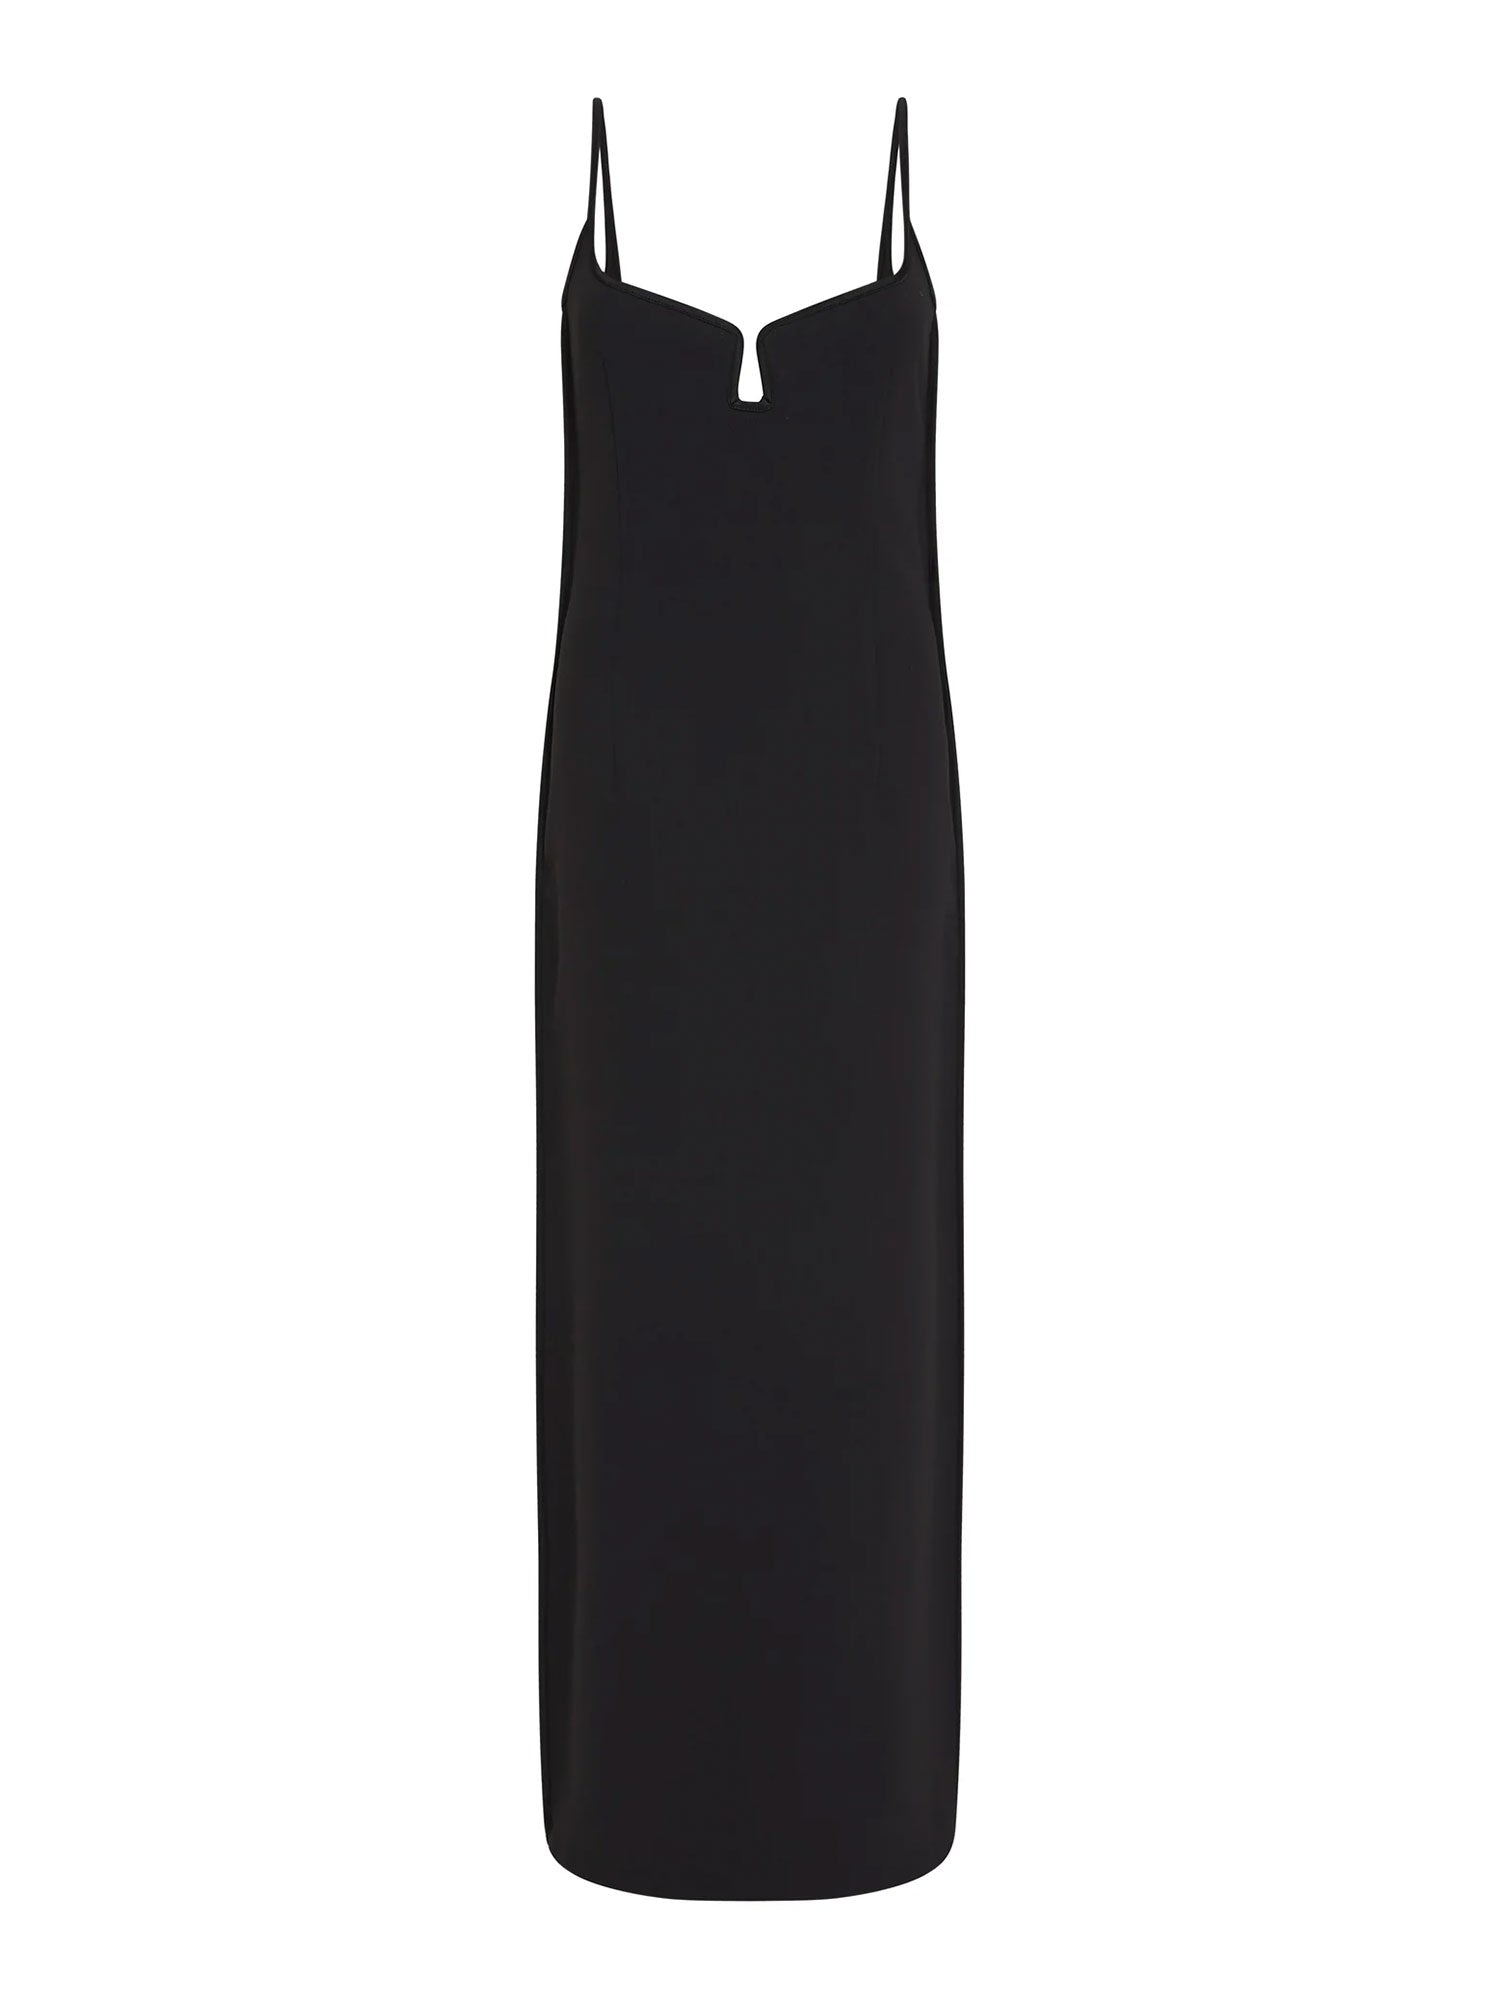 Marlo Dress | Black | Paris Georgia Official Store